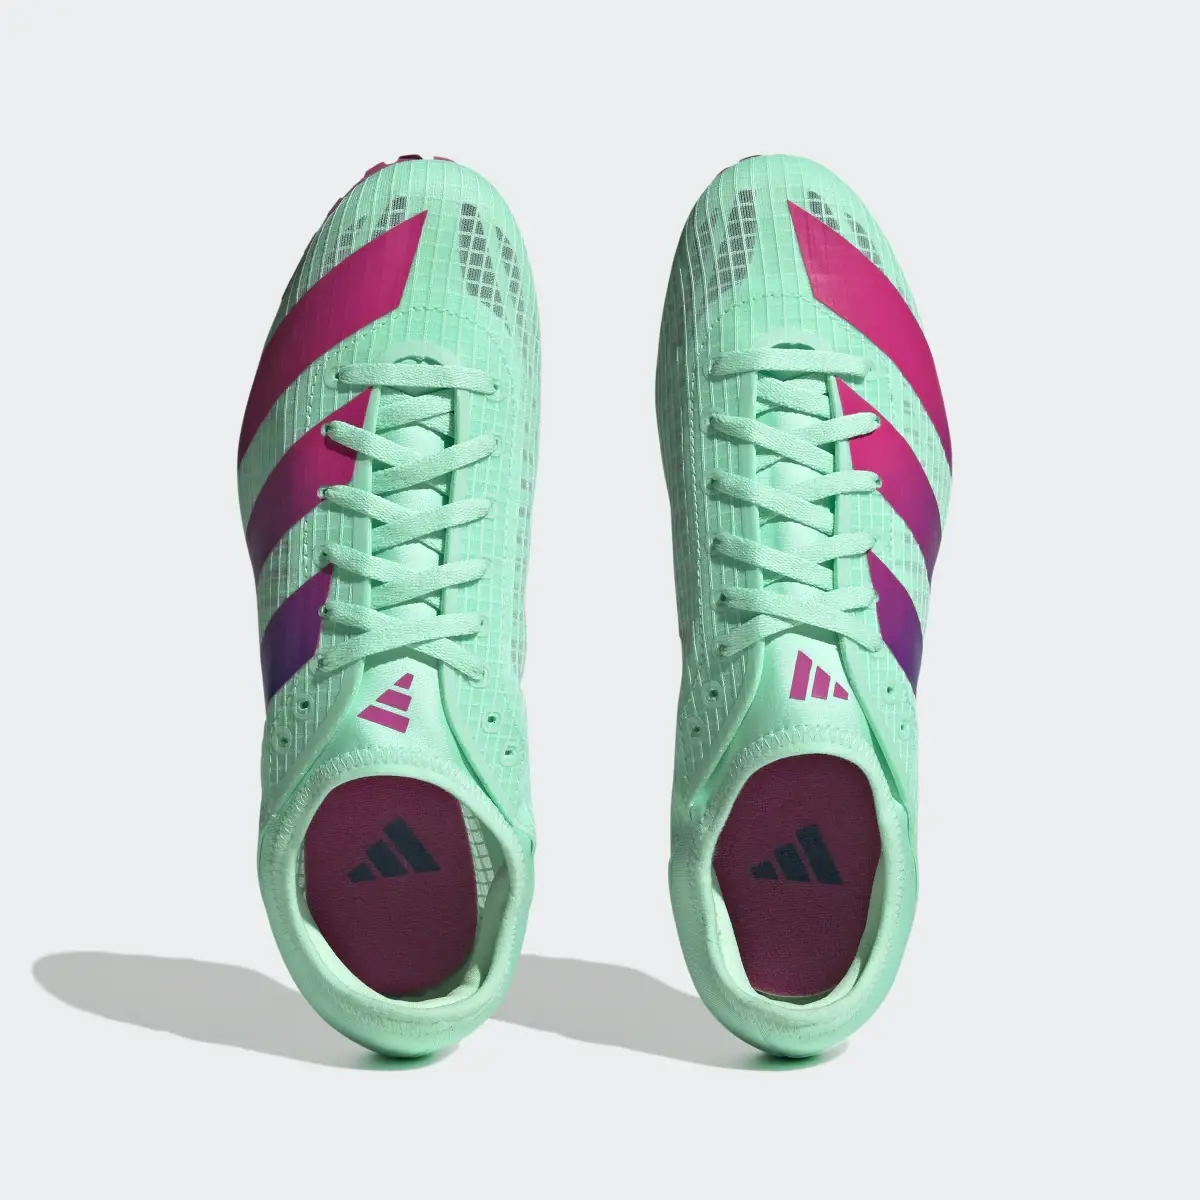 Adidas Adizero Sprintstar Running Shoes. 3